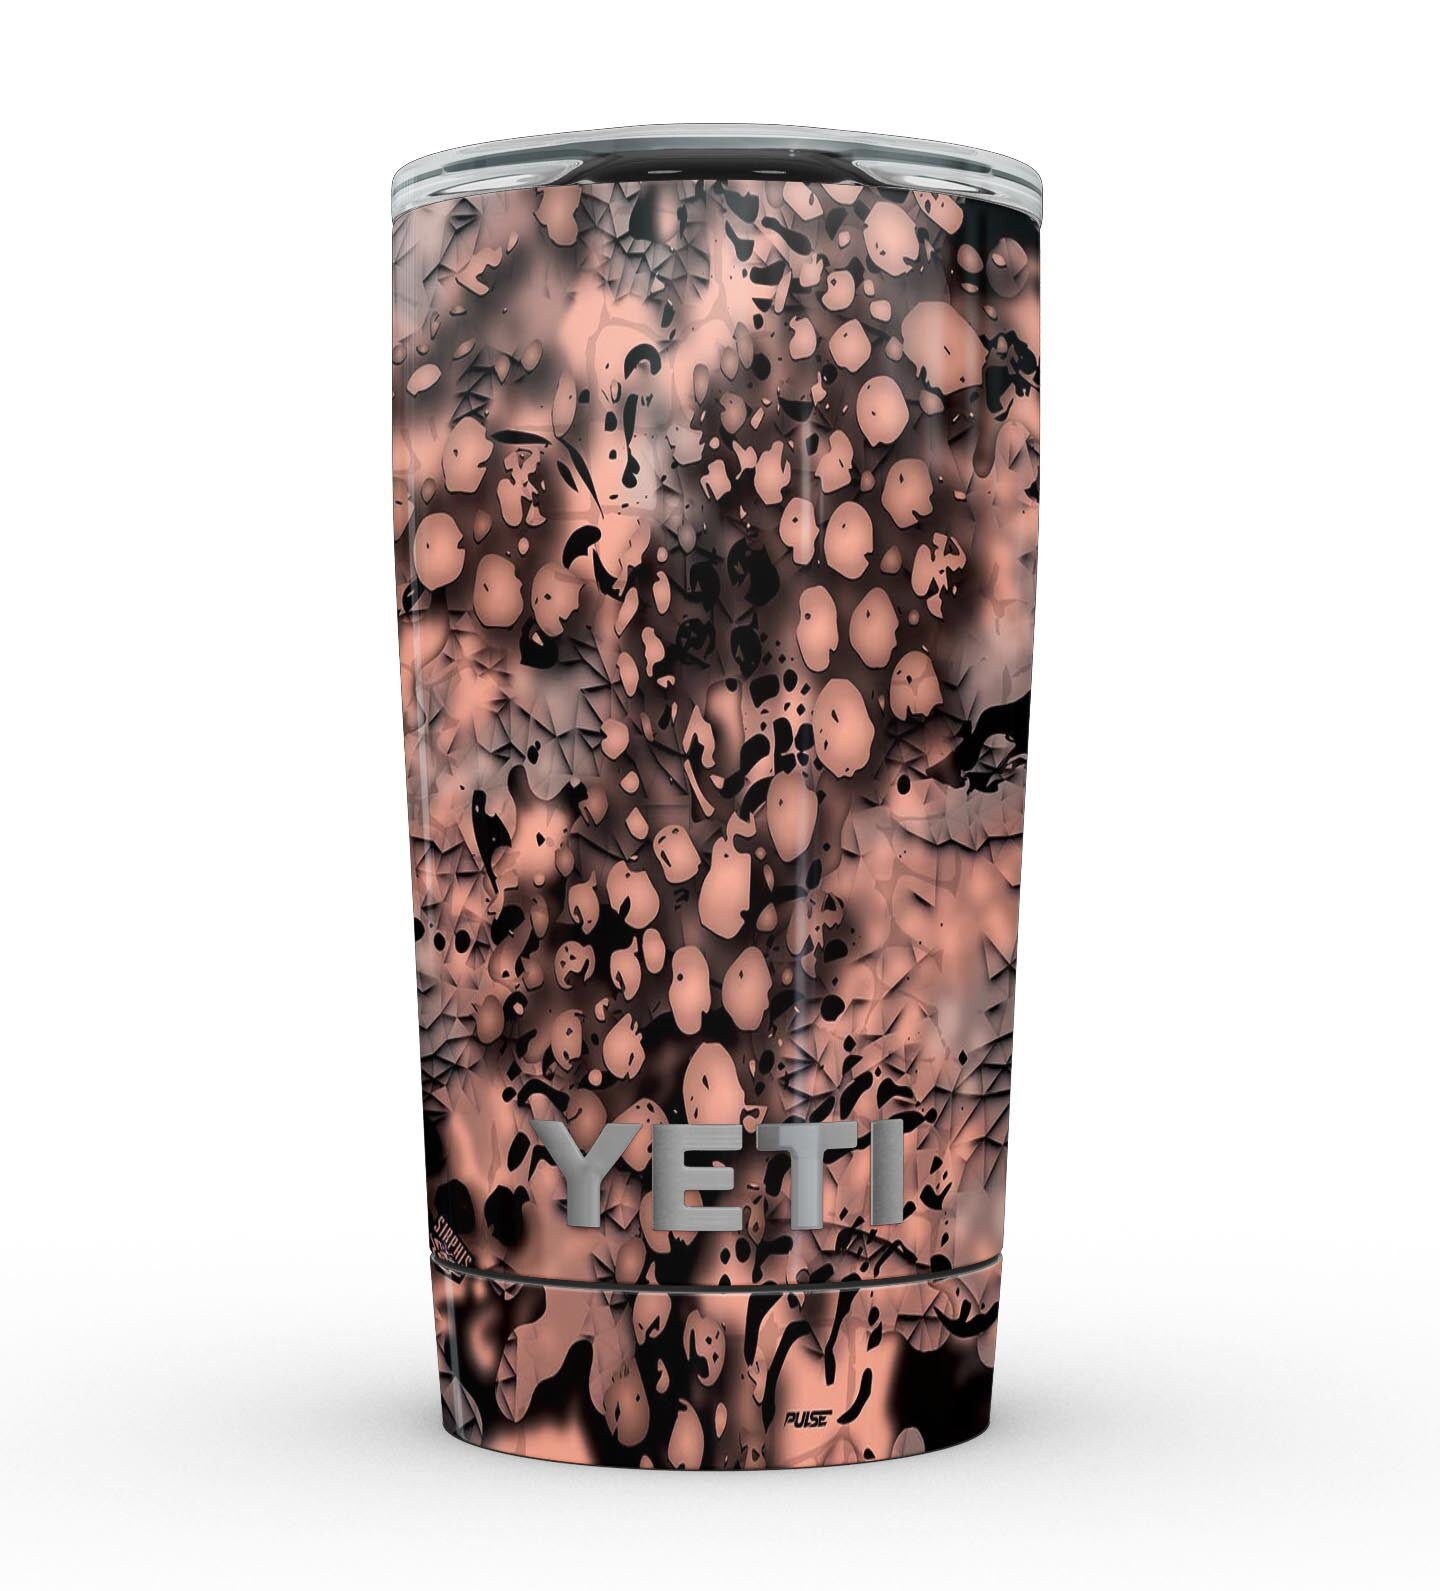 Skin Decal for Yeti 30 oz Rambler Tumbler / pink camo, camouflage